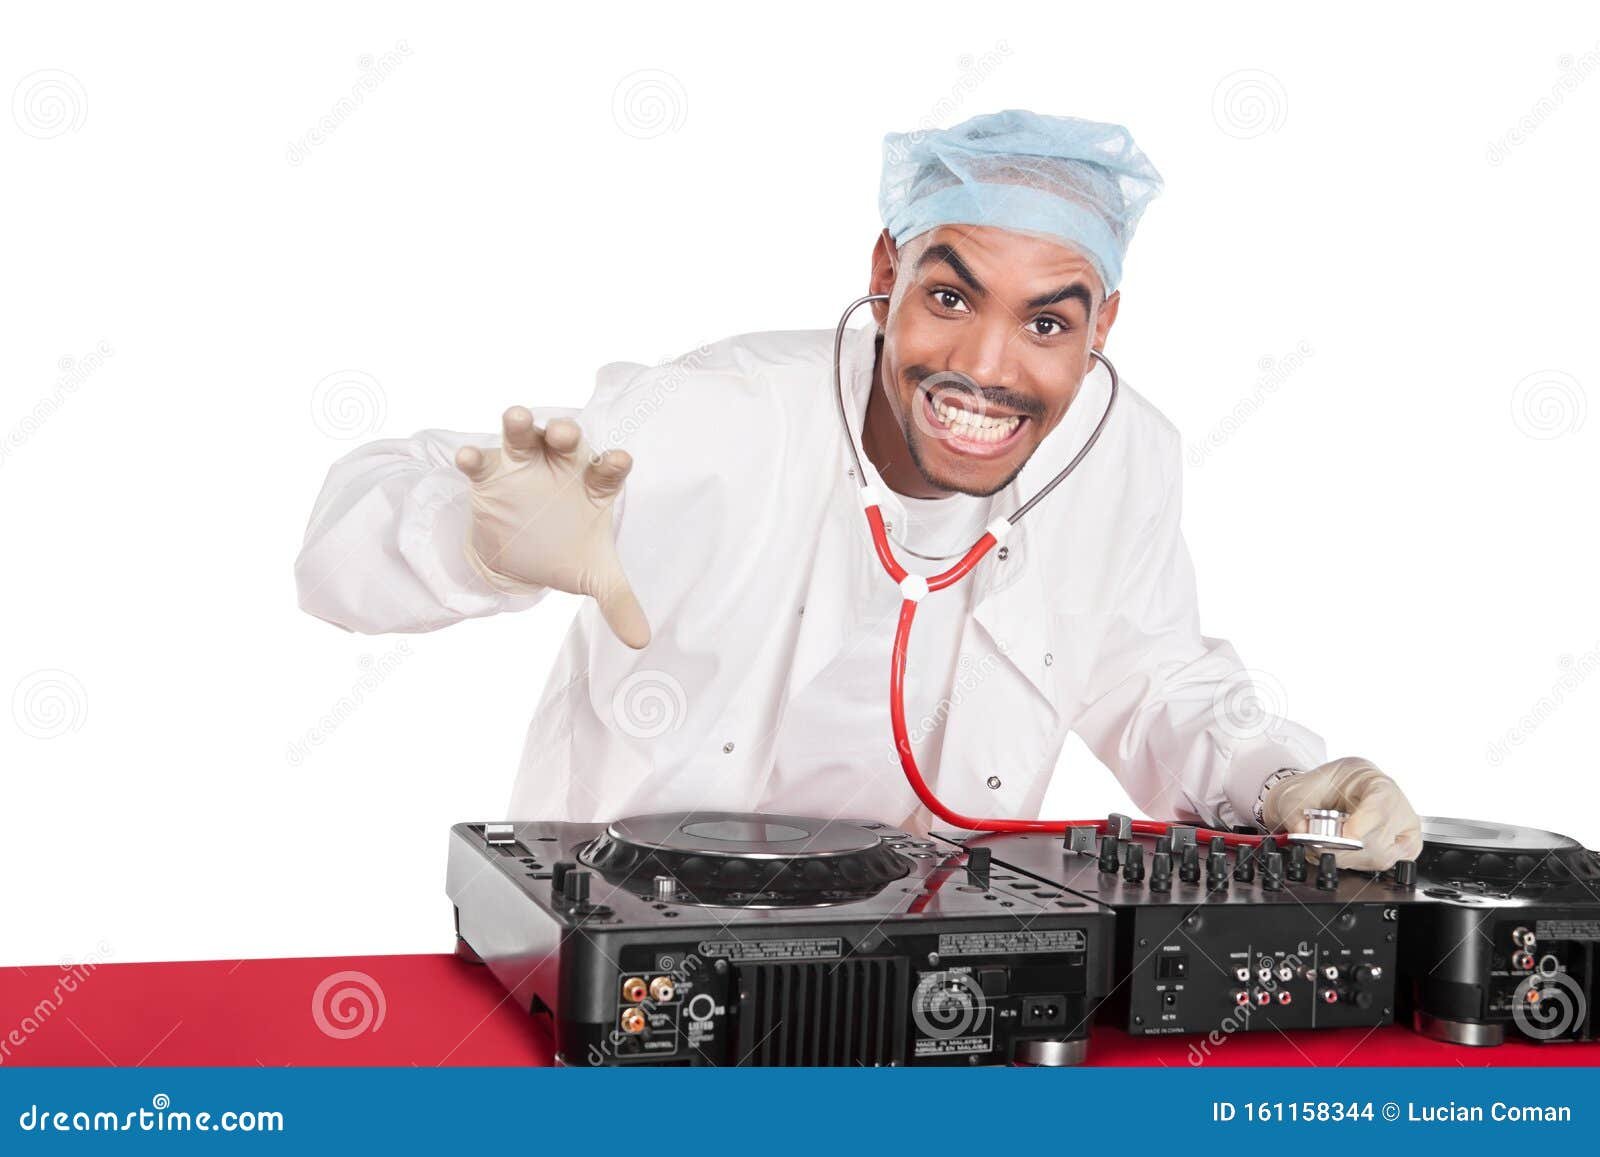 DJ Doctor Profile Pic